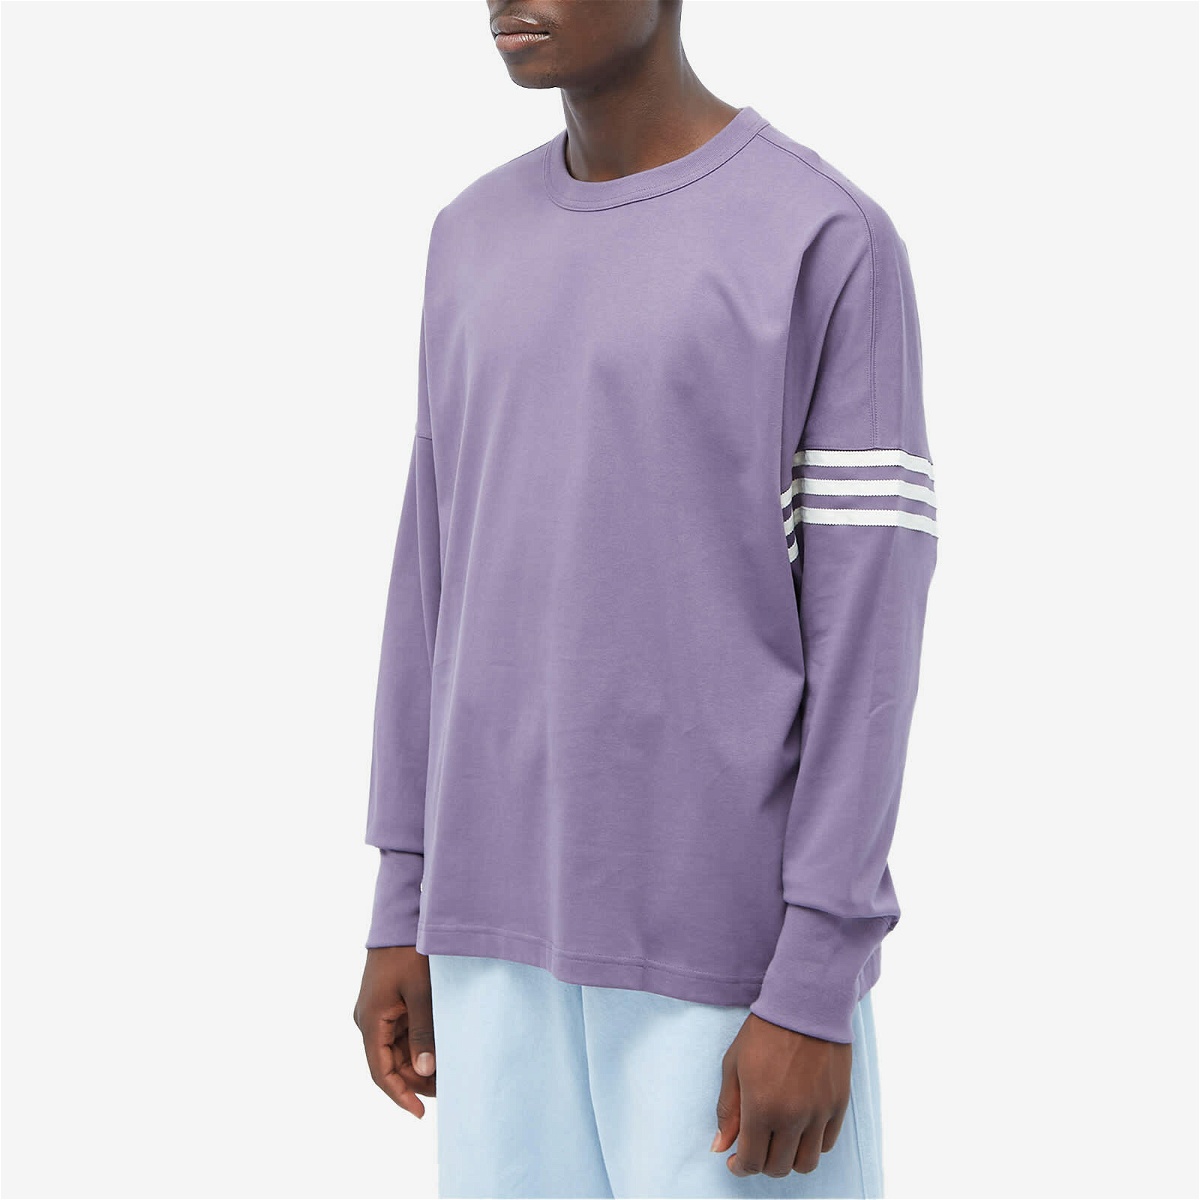 Adidas Men\'s Long Sleeve Shadow Violet in adidas Neuclassics T-Shirt